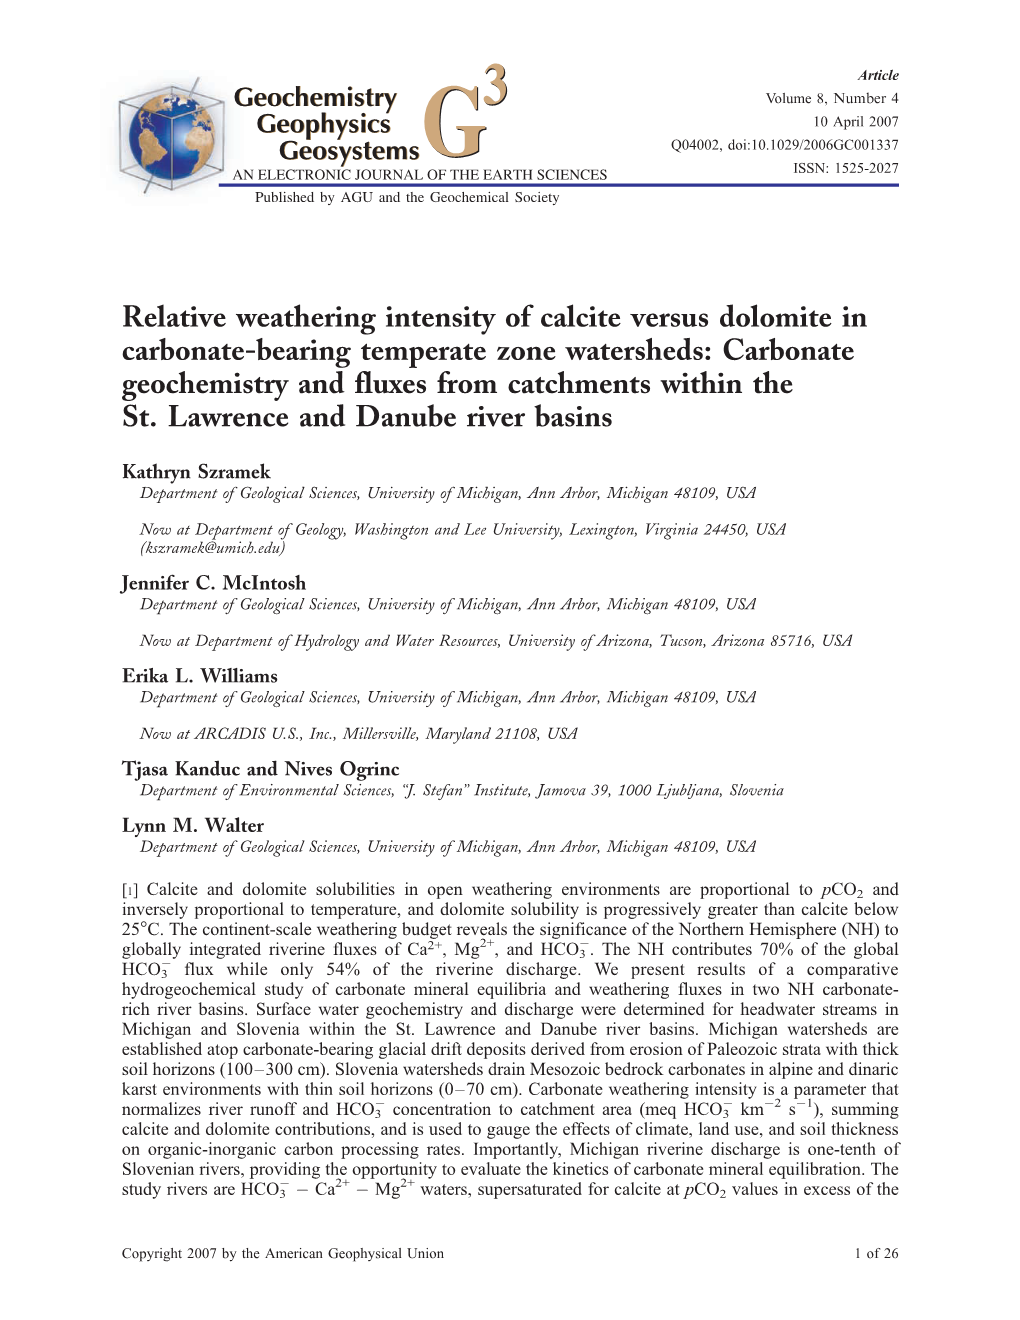 Relative Weathering Intensity of Calcite Versus Dolomite In